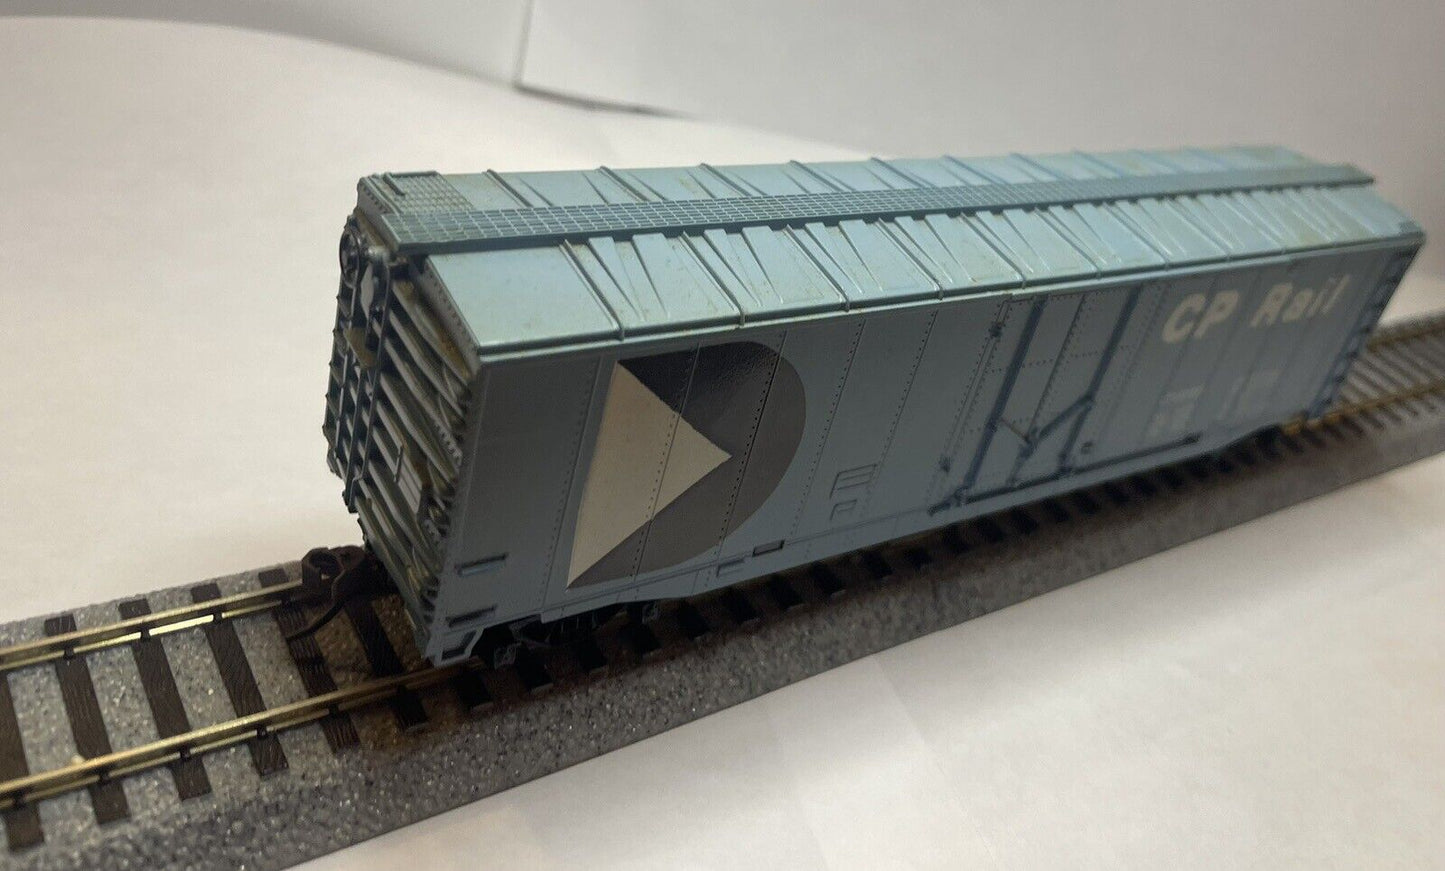 HO Scale TYCO 339D CP Rail 40' Boxcar #CP56767